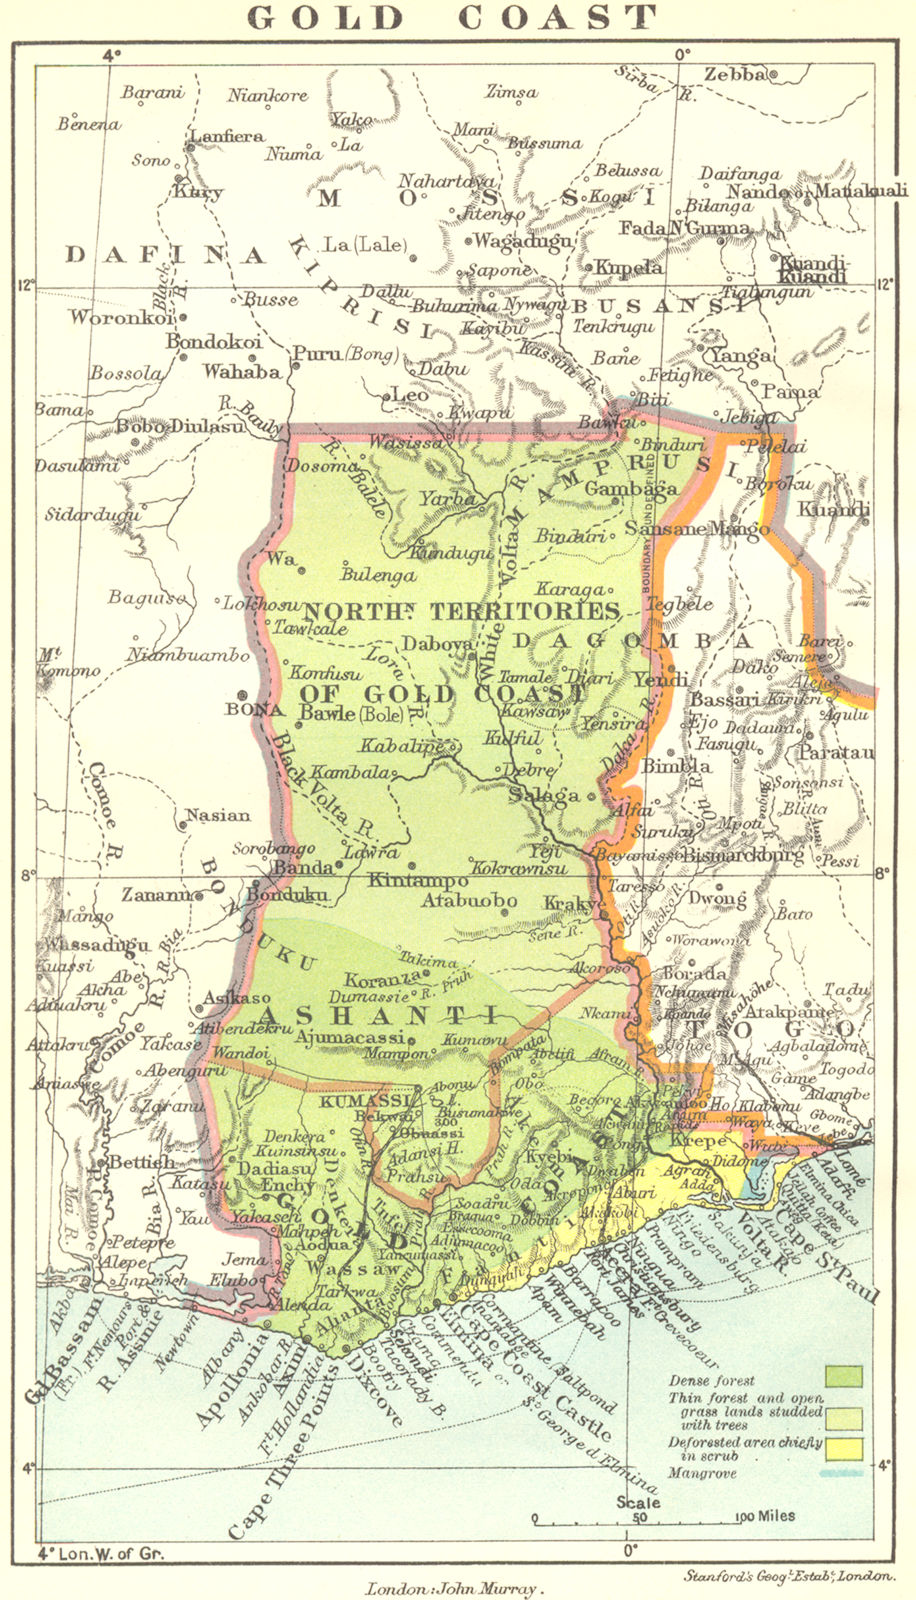 GHANA. Ashanti & North Territories 1911 old antique vintage map plan chart